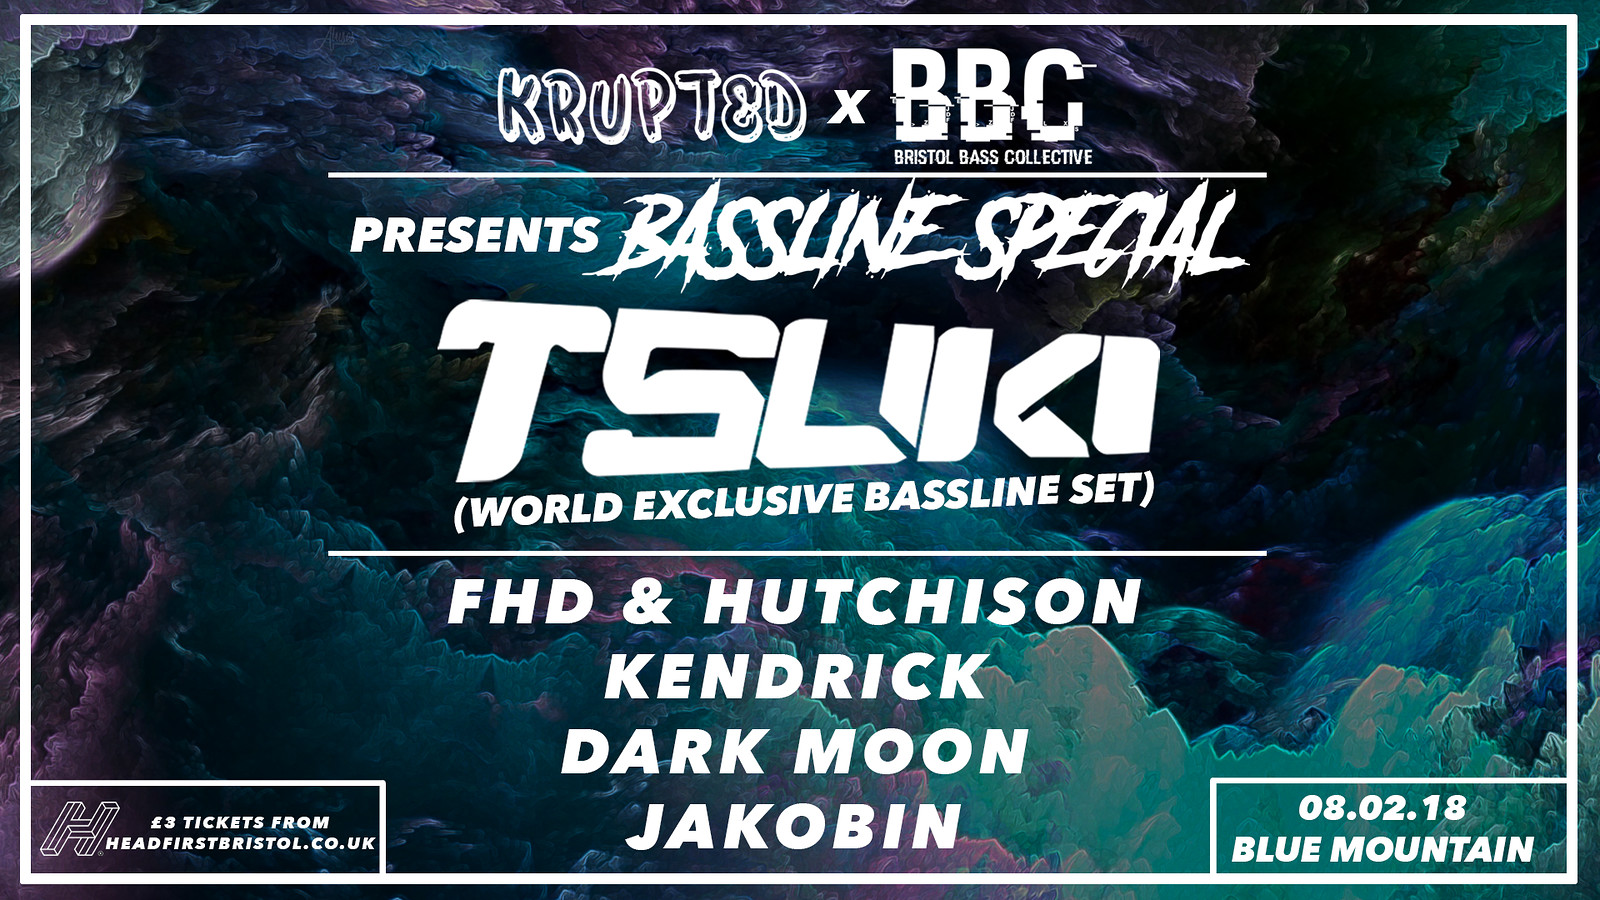 Krupted & BBC - TSUKI - Bassline Special at Blue Mountain